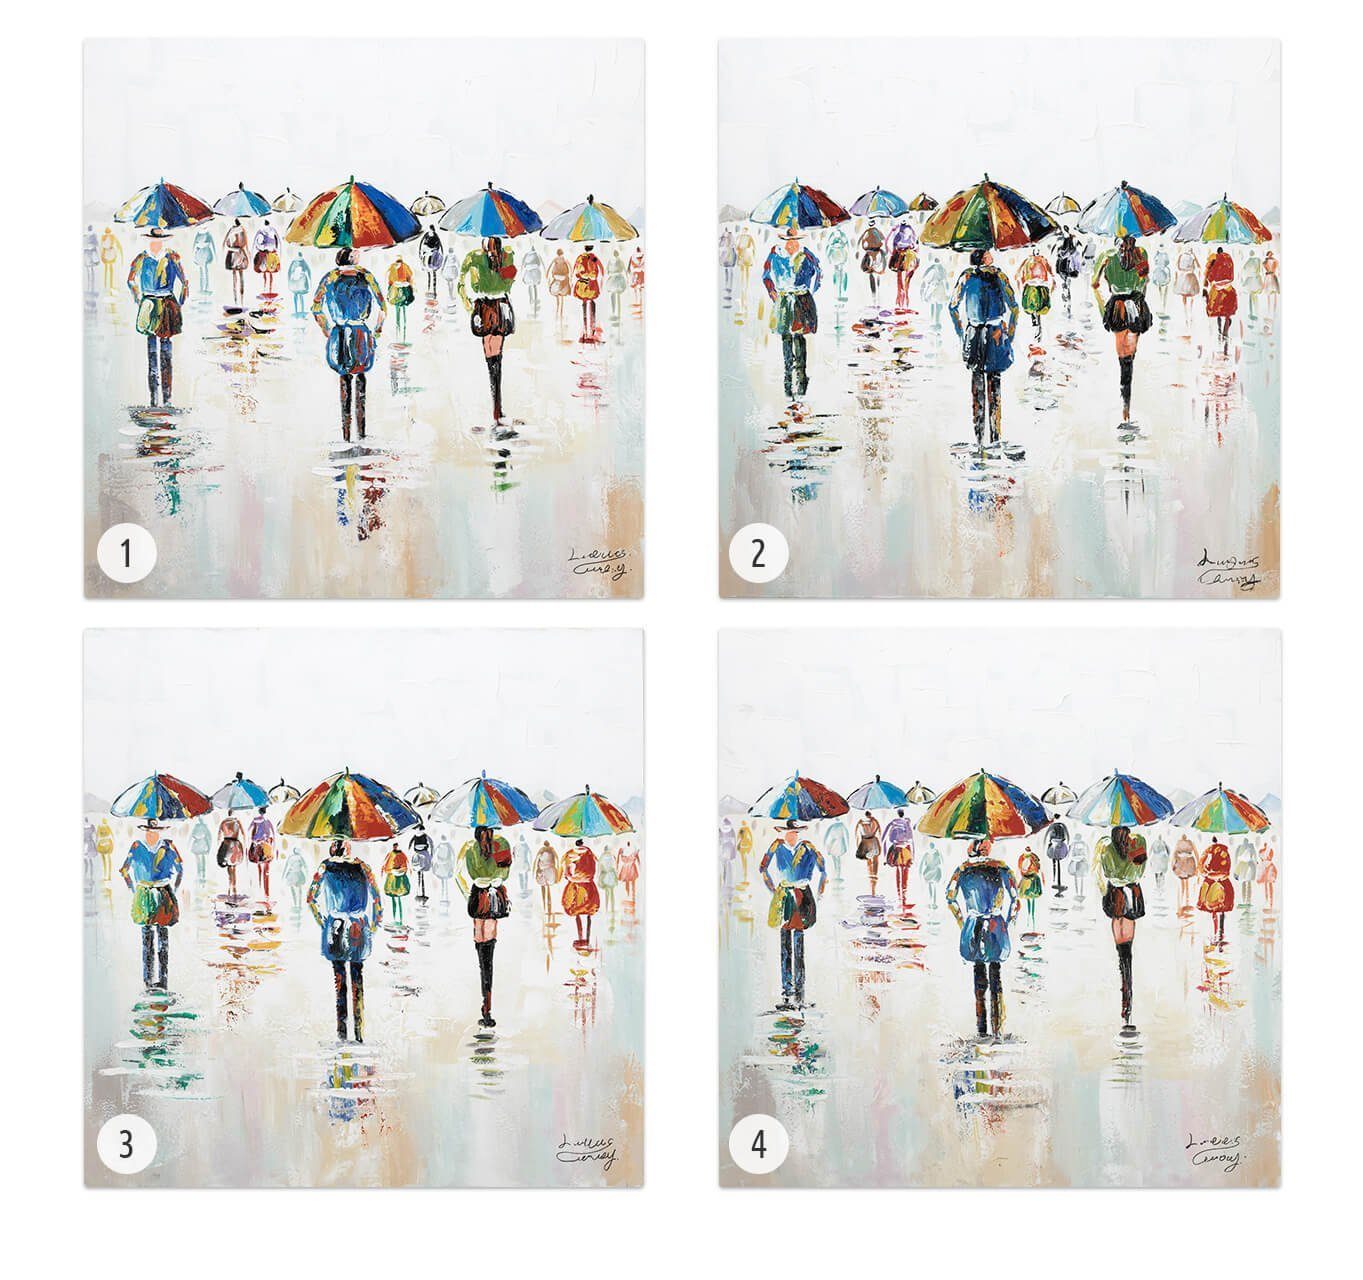 KUNSTLOFT Gemälde Süße Regengüsse 80x80 100% HANDGEMALT cm, Wandbild Wohnzimmer Leinwandbild